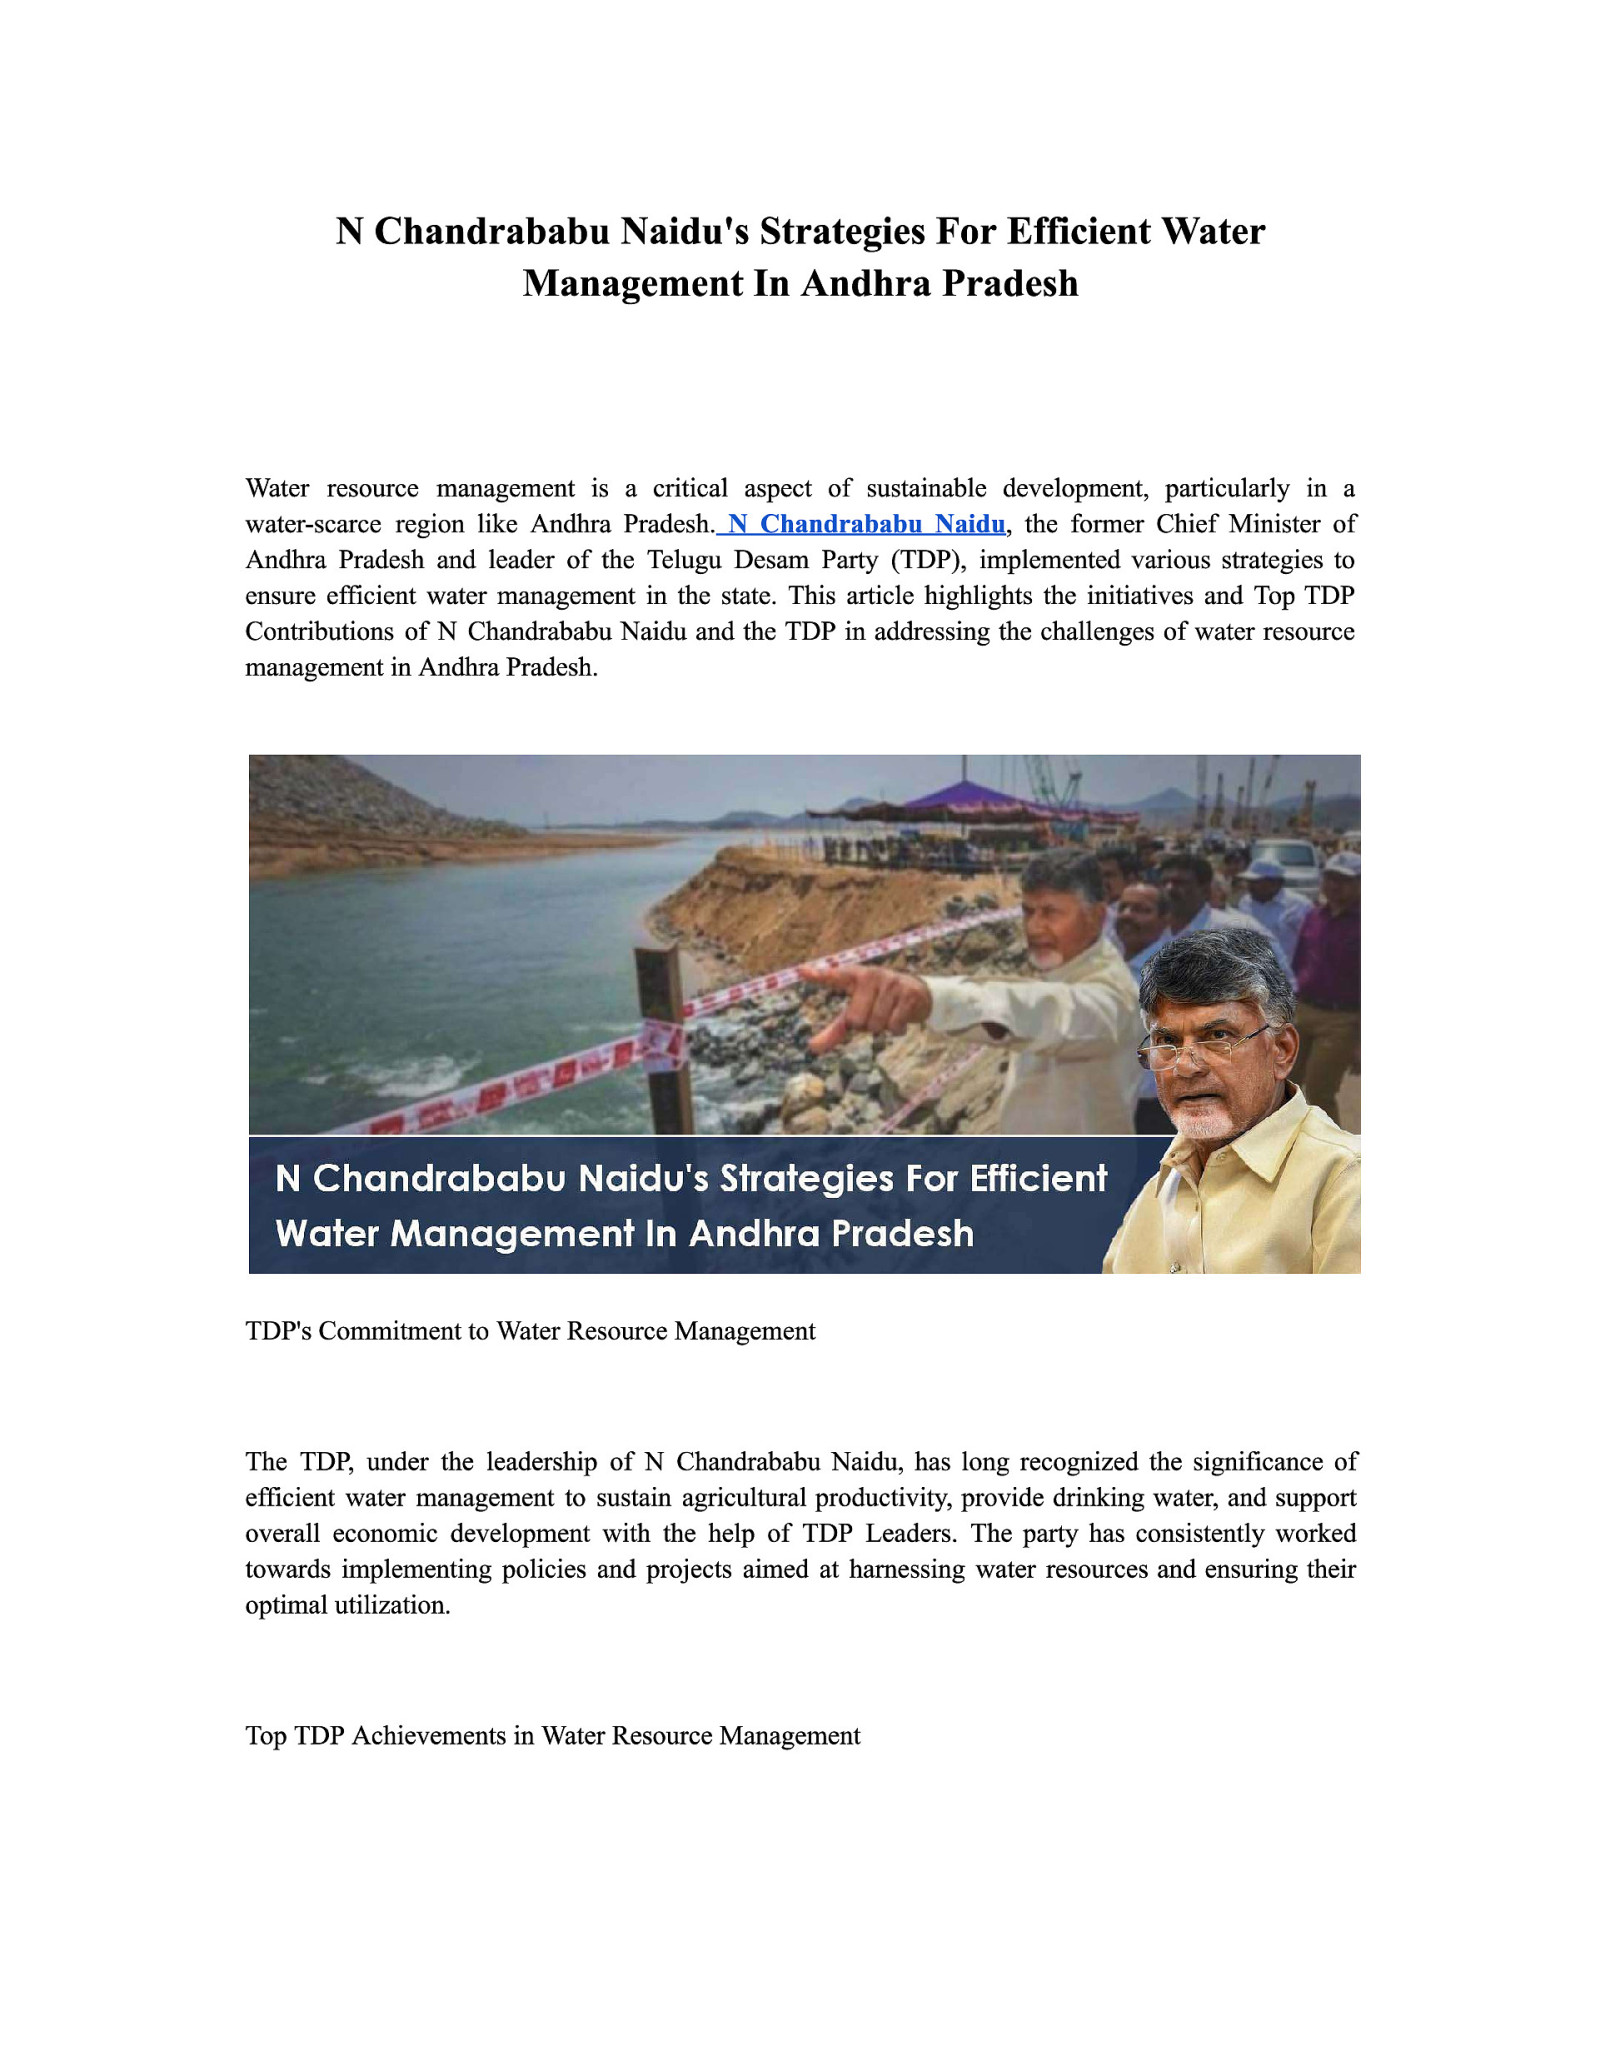 N Chandrababu Naidu’s Strategies For Efficient Water Management In Andhra Pradesh